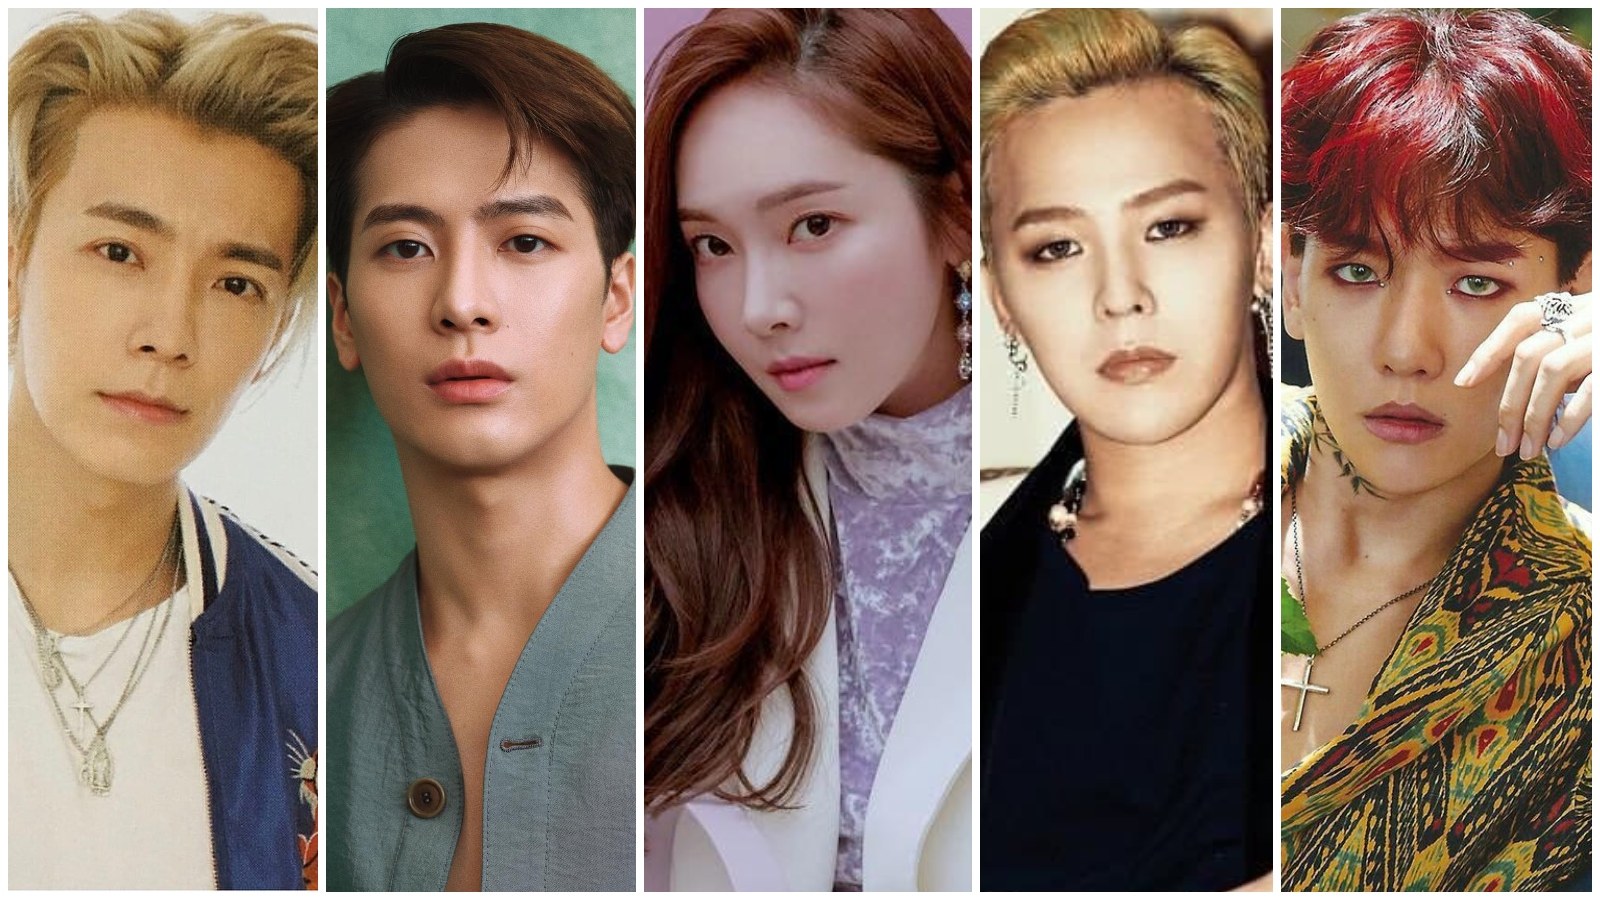 Lee Dong-hae, Jackson Wang, Jessica Jung, G-Dragon and Baekhyun all own fashion brands. Photos: @dongdonghaehaehae, @jacksonwang852g7, @blancandeclare_official, @gdragon_official/Instagram; SM Entertainment